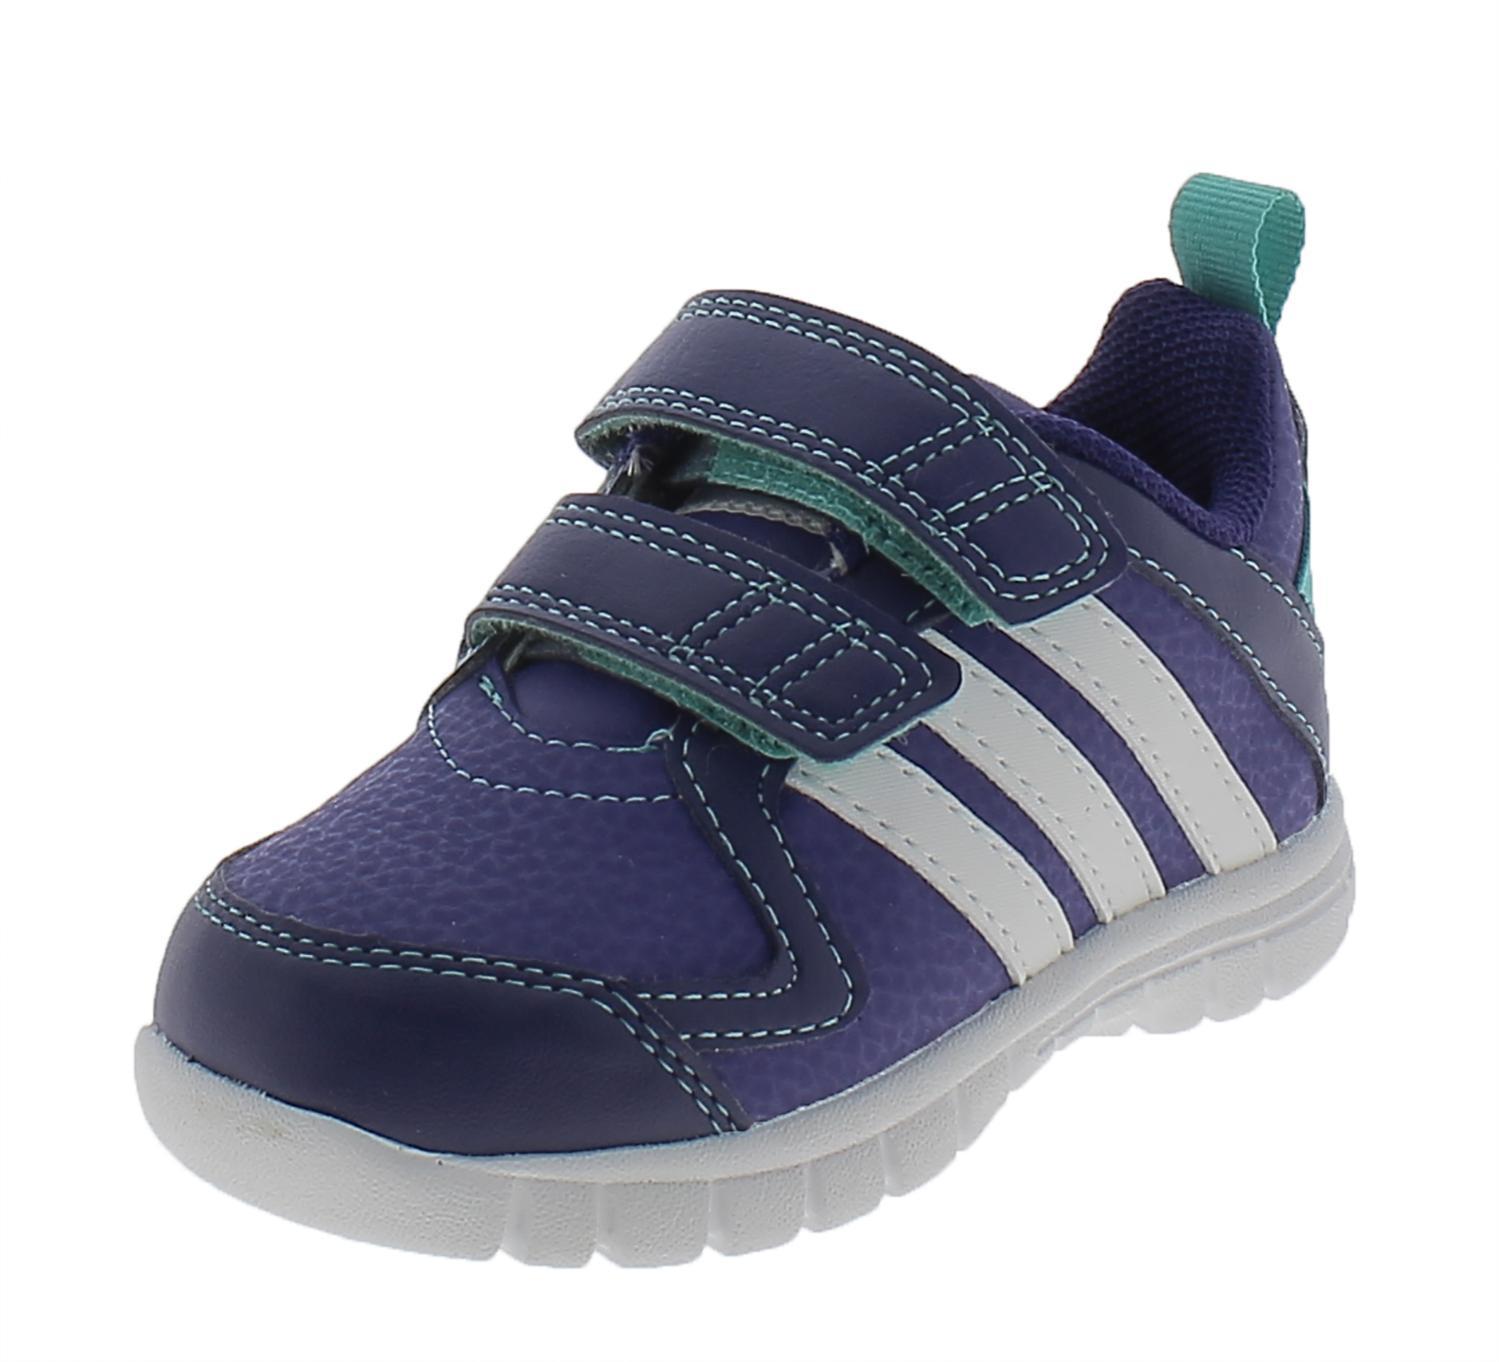 Adidas sta fluid 3 cf i scarpe bambina viola pelle strappi m25492 تباسكو